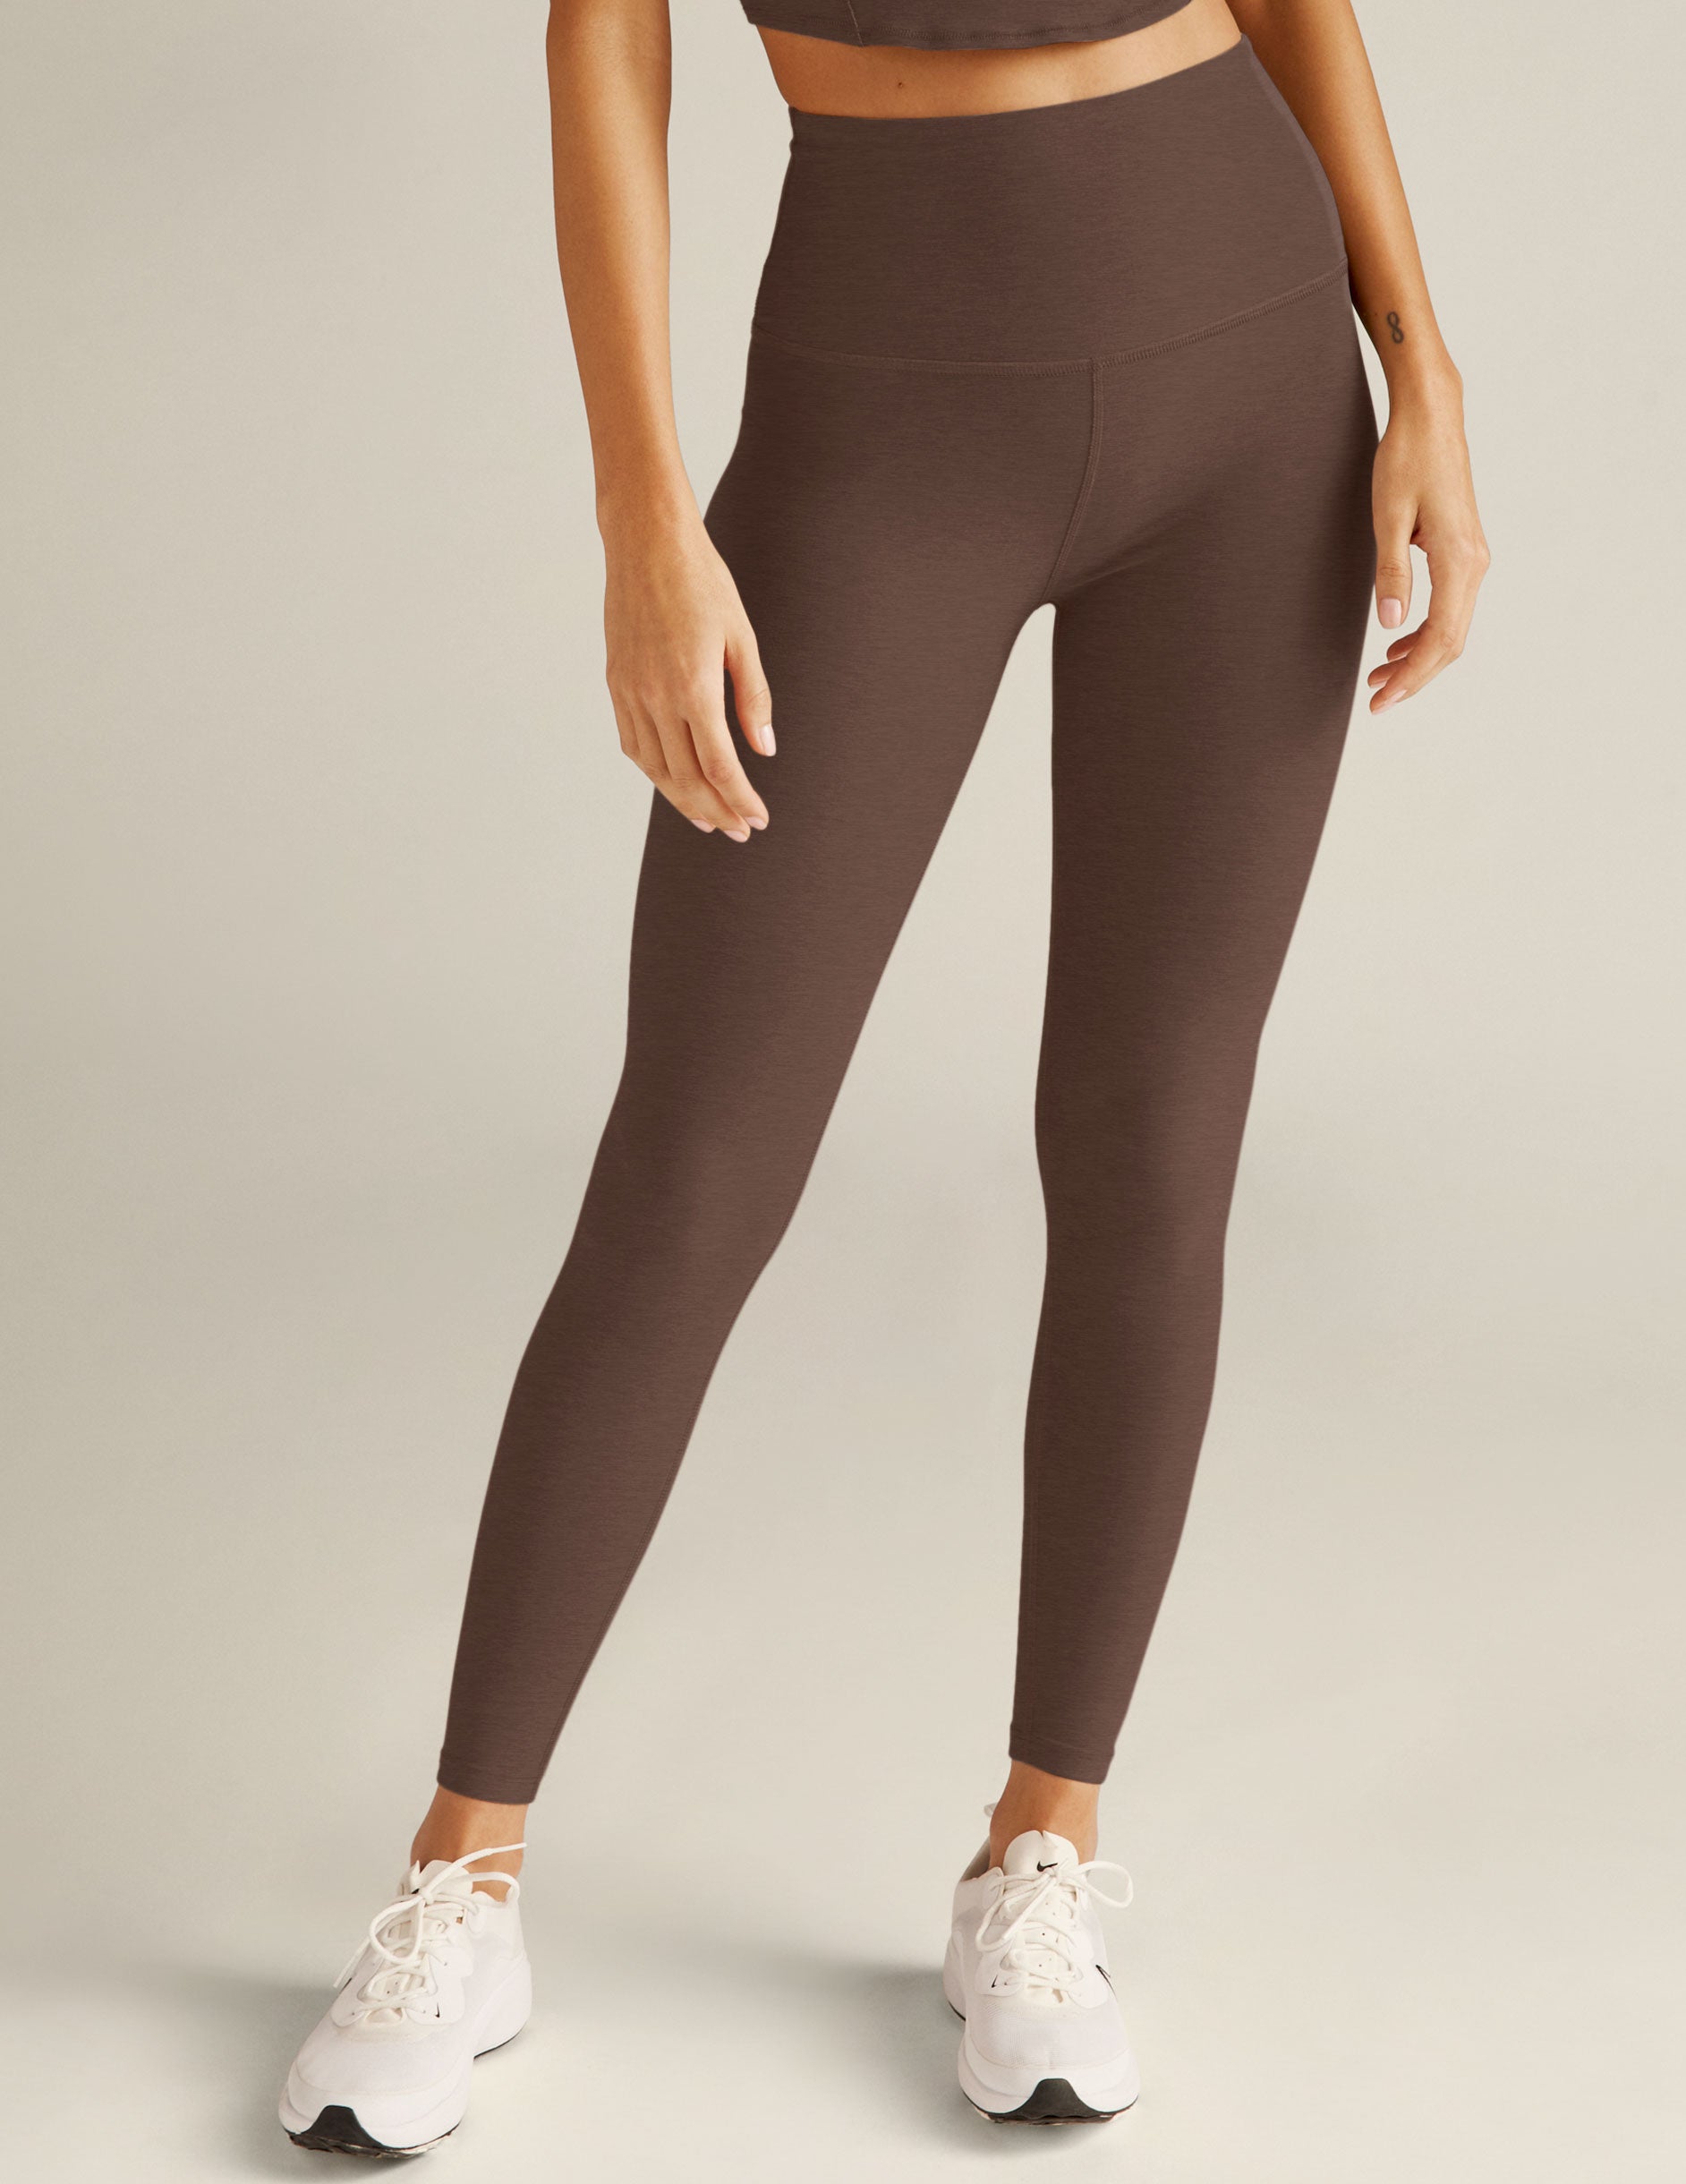 Women's leggings Nezville - HEATHER GREY Grey - E23